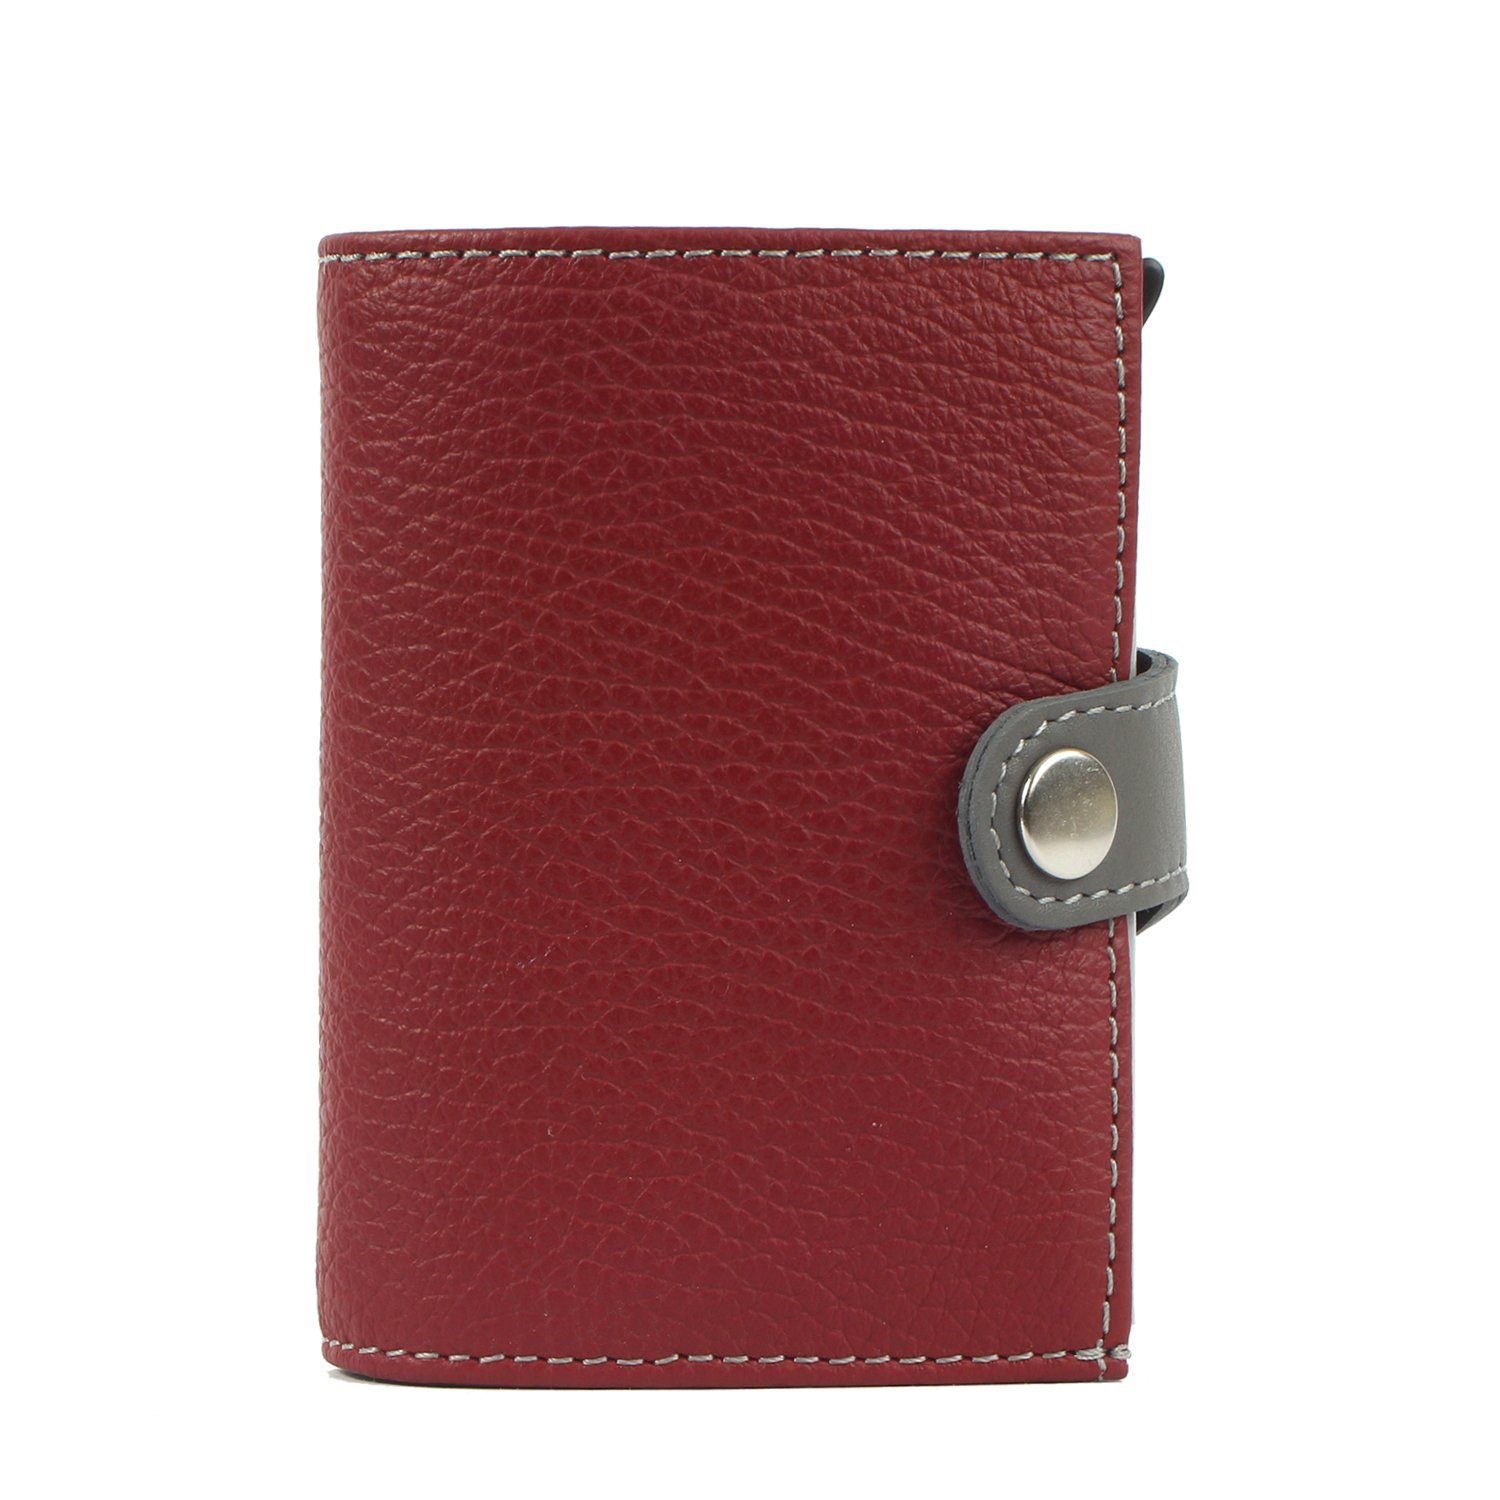 karminrot double noonyu Leder Kreditkartenbörse aus Upcycling Mini RFID Margelisch leather, Geldbörse